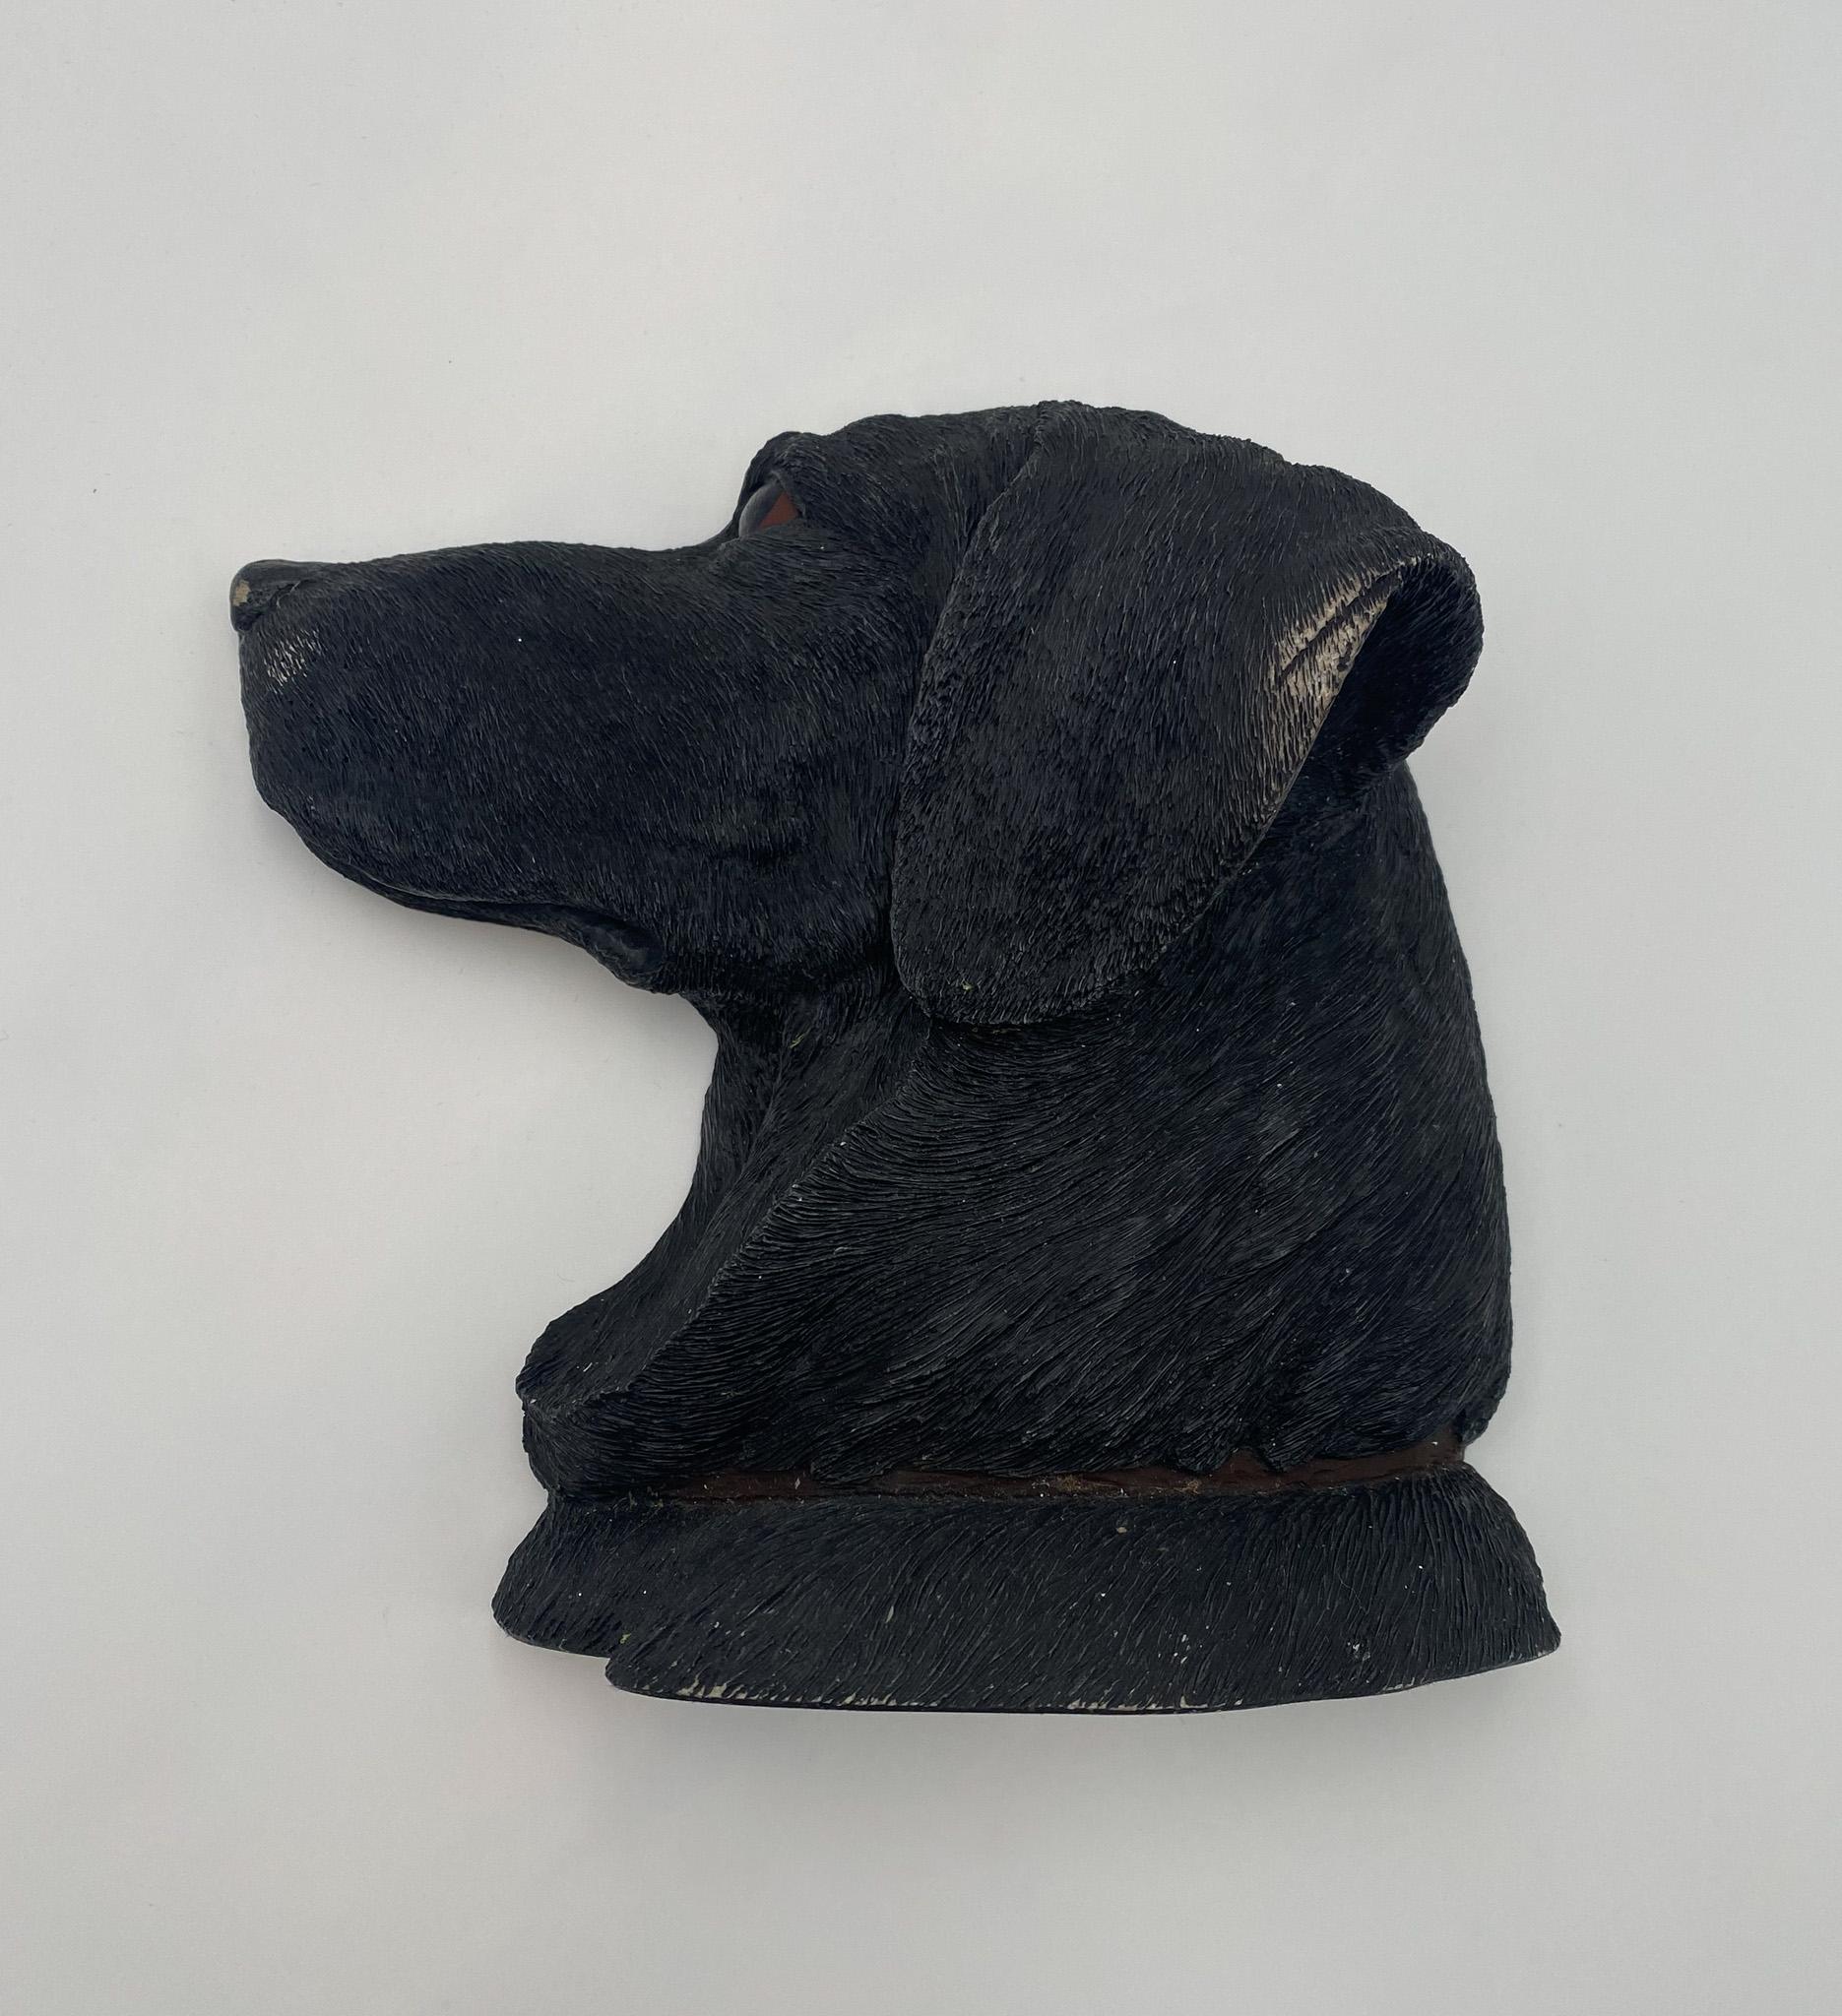 Aus-Ben Studios Black Labrador Dog Head Bookends, United States, circa 1987 For Sale 1